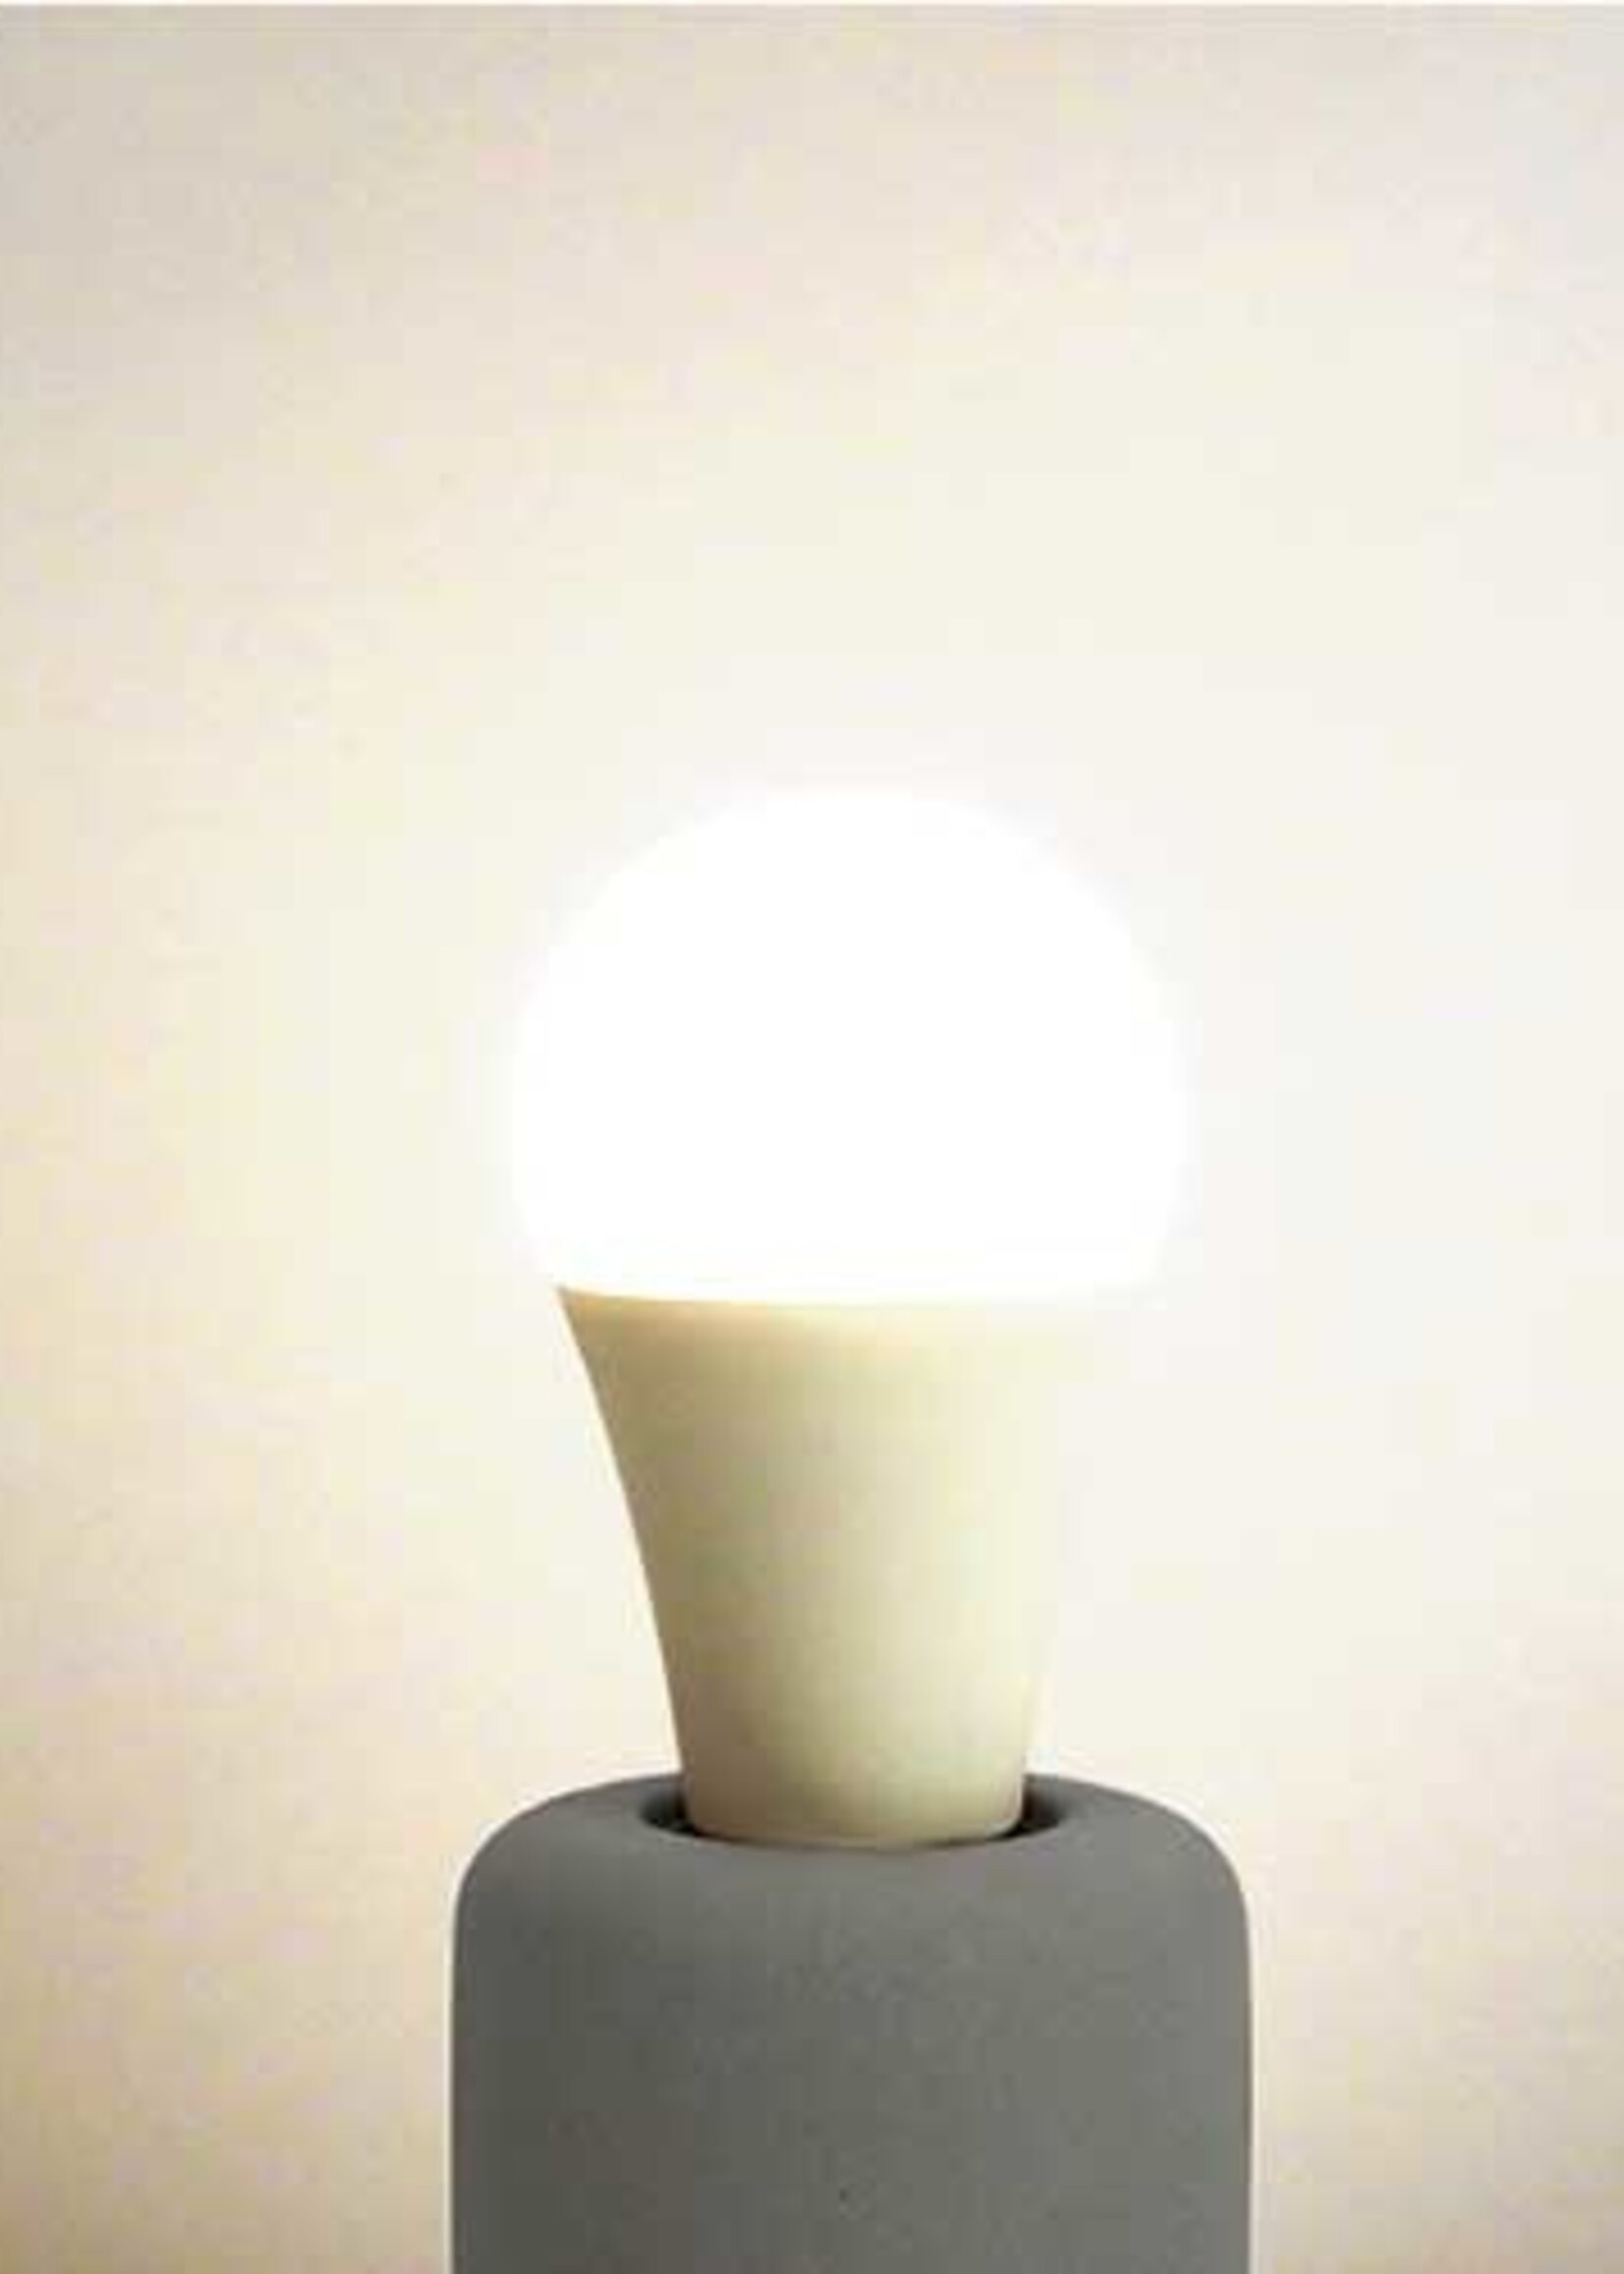 LEDWINKEL-Online E27 LED Lamp 7W 3000K warm wit A60